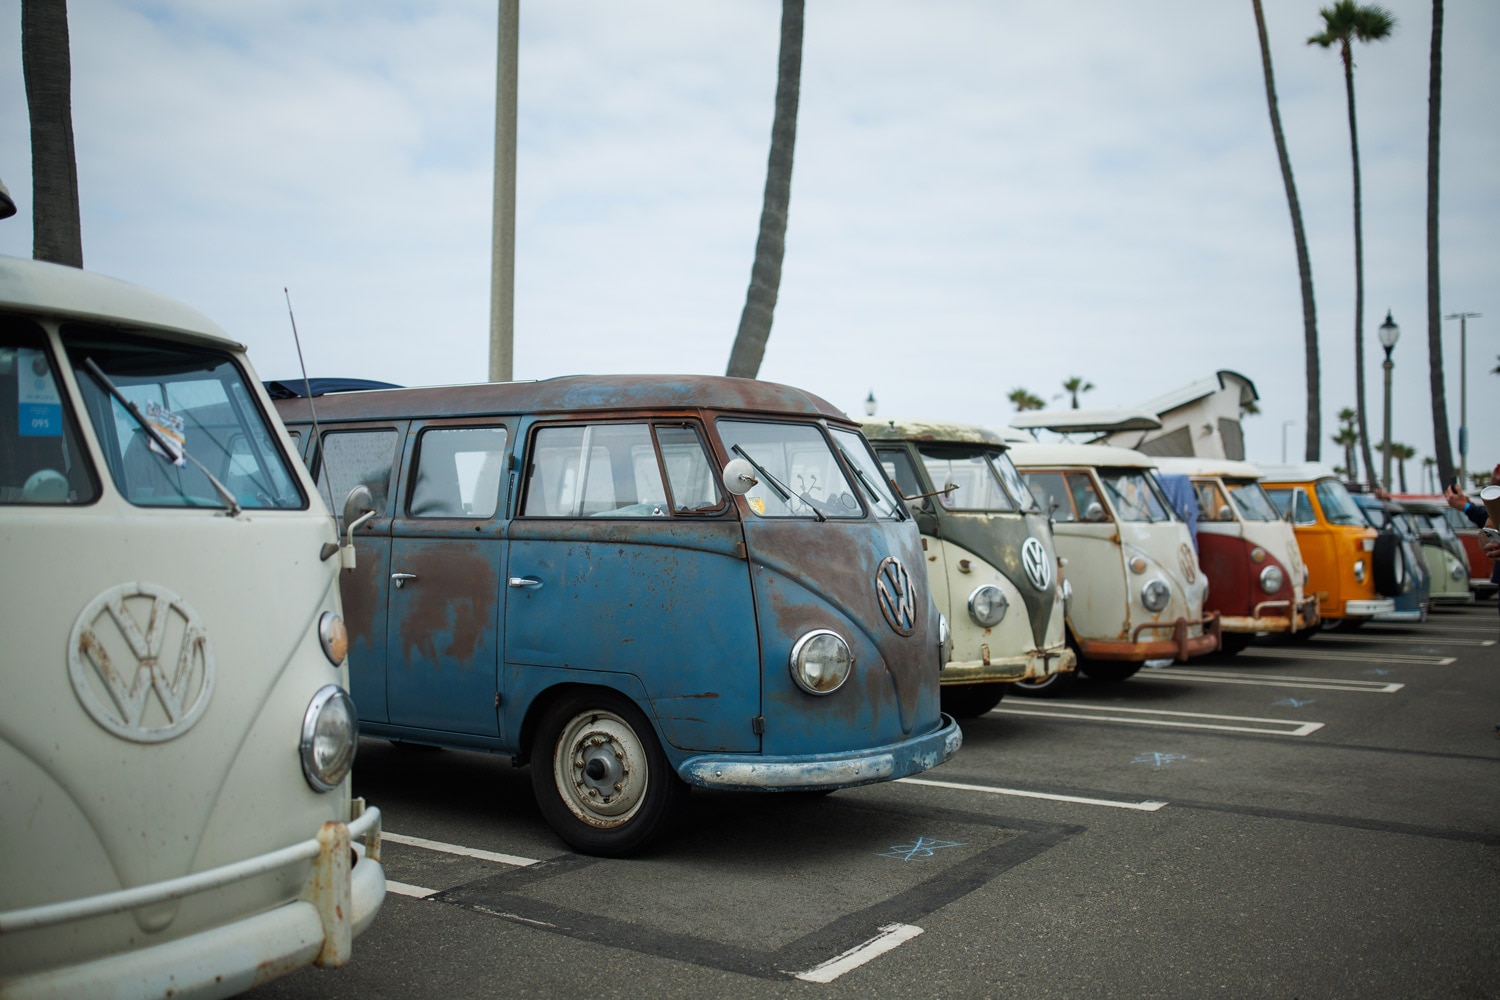  A multicolored row of classic Volkswagen vans